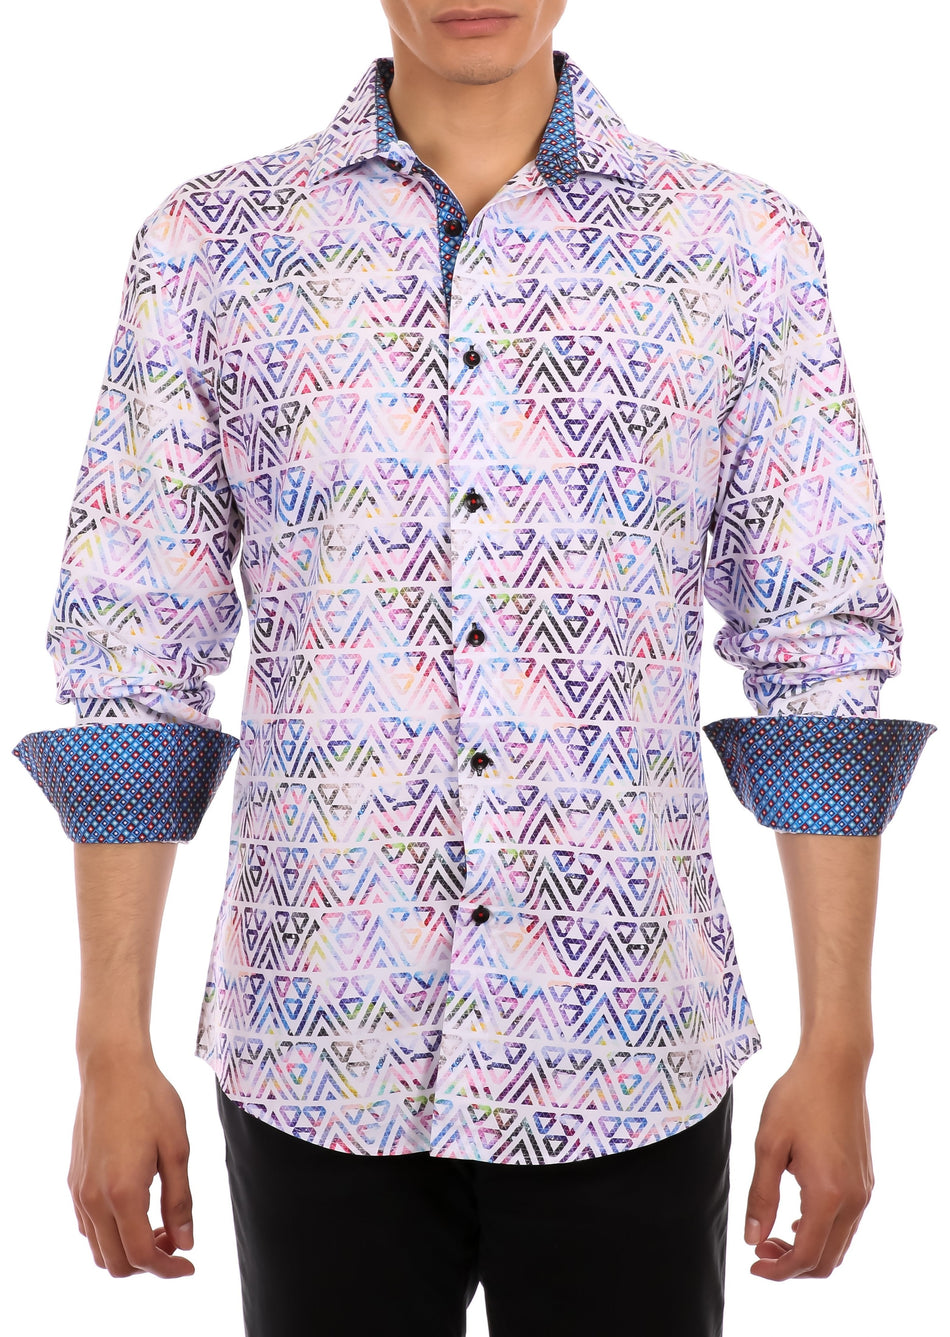 Rainbow Triangle Button Up Long Sleeve Dress Shirt